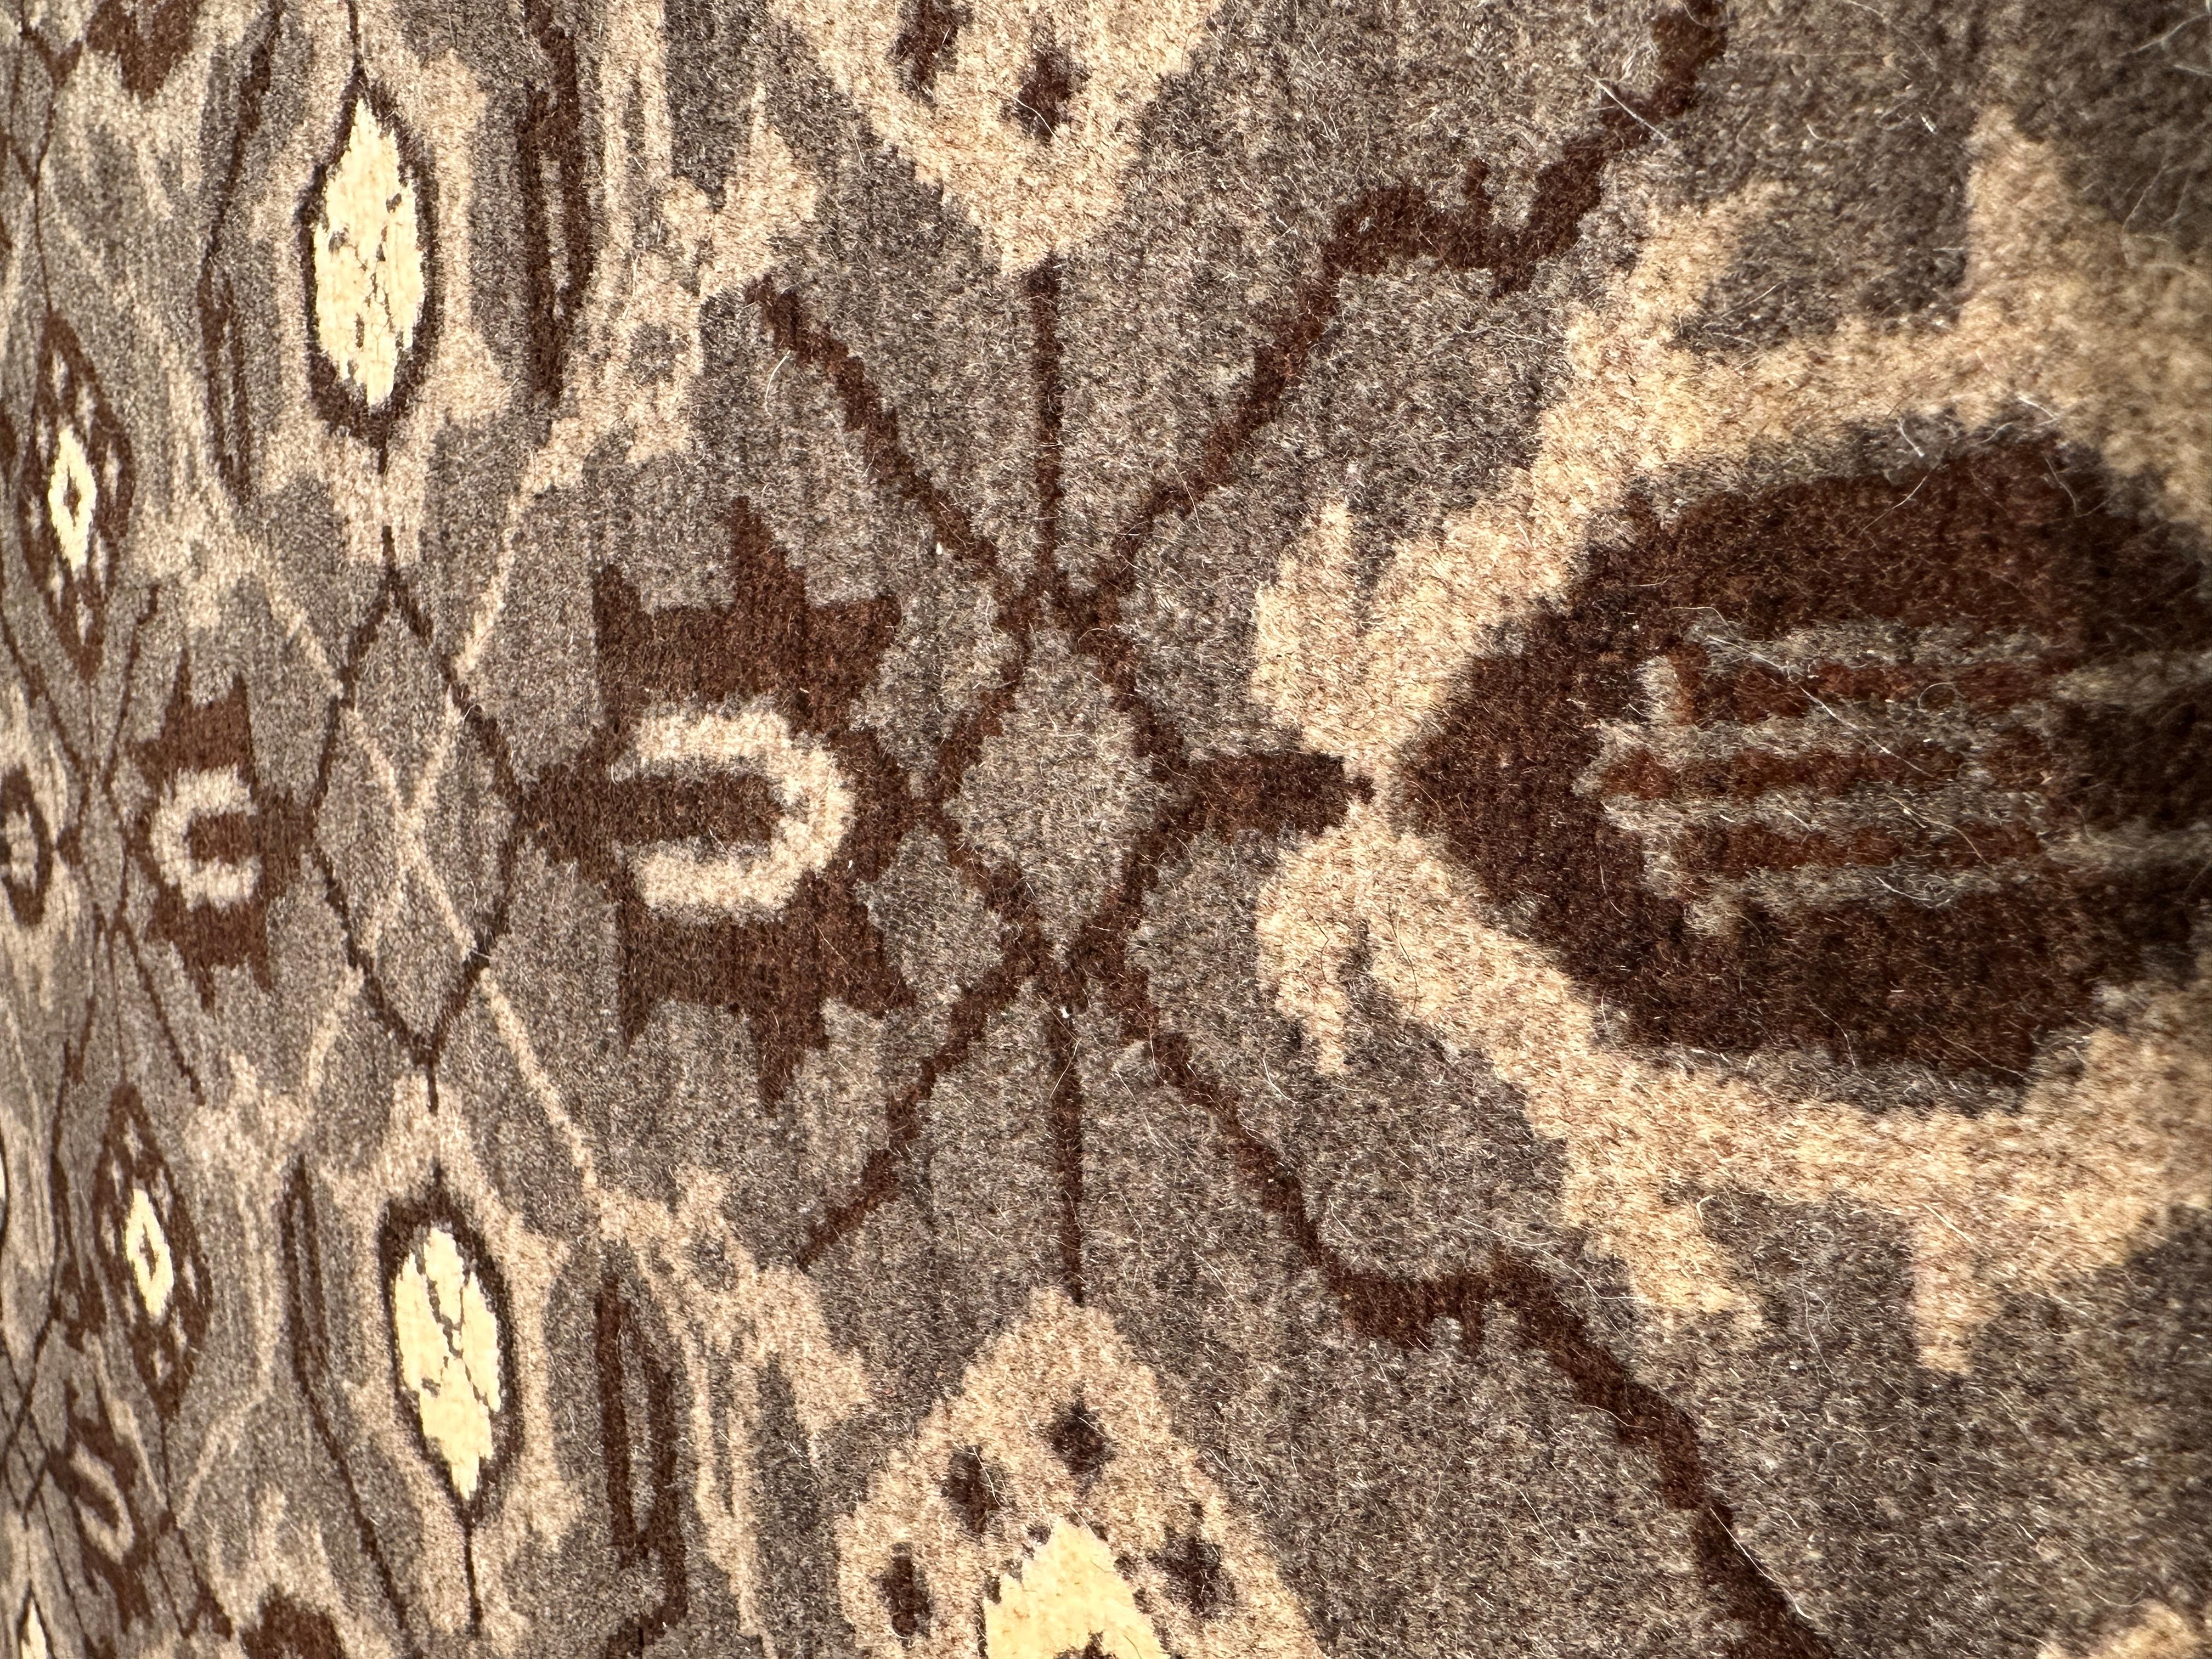 Turkish Ararat Rugs Mamluk Carpet with Lattice Design, Natural Sheep Wool Colors No Dye For Sale